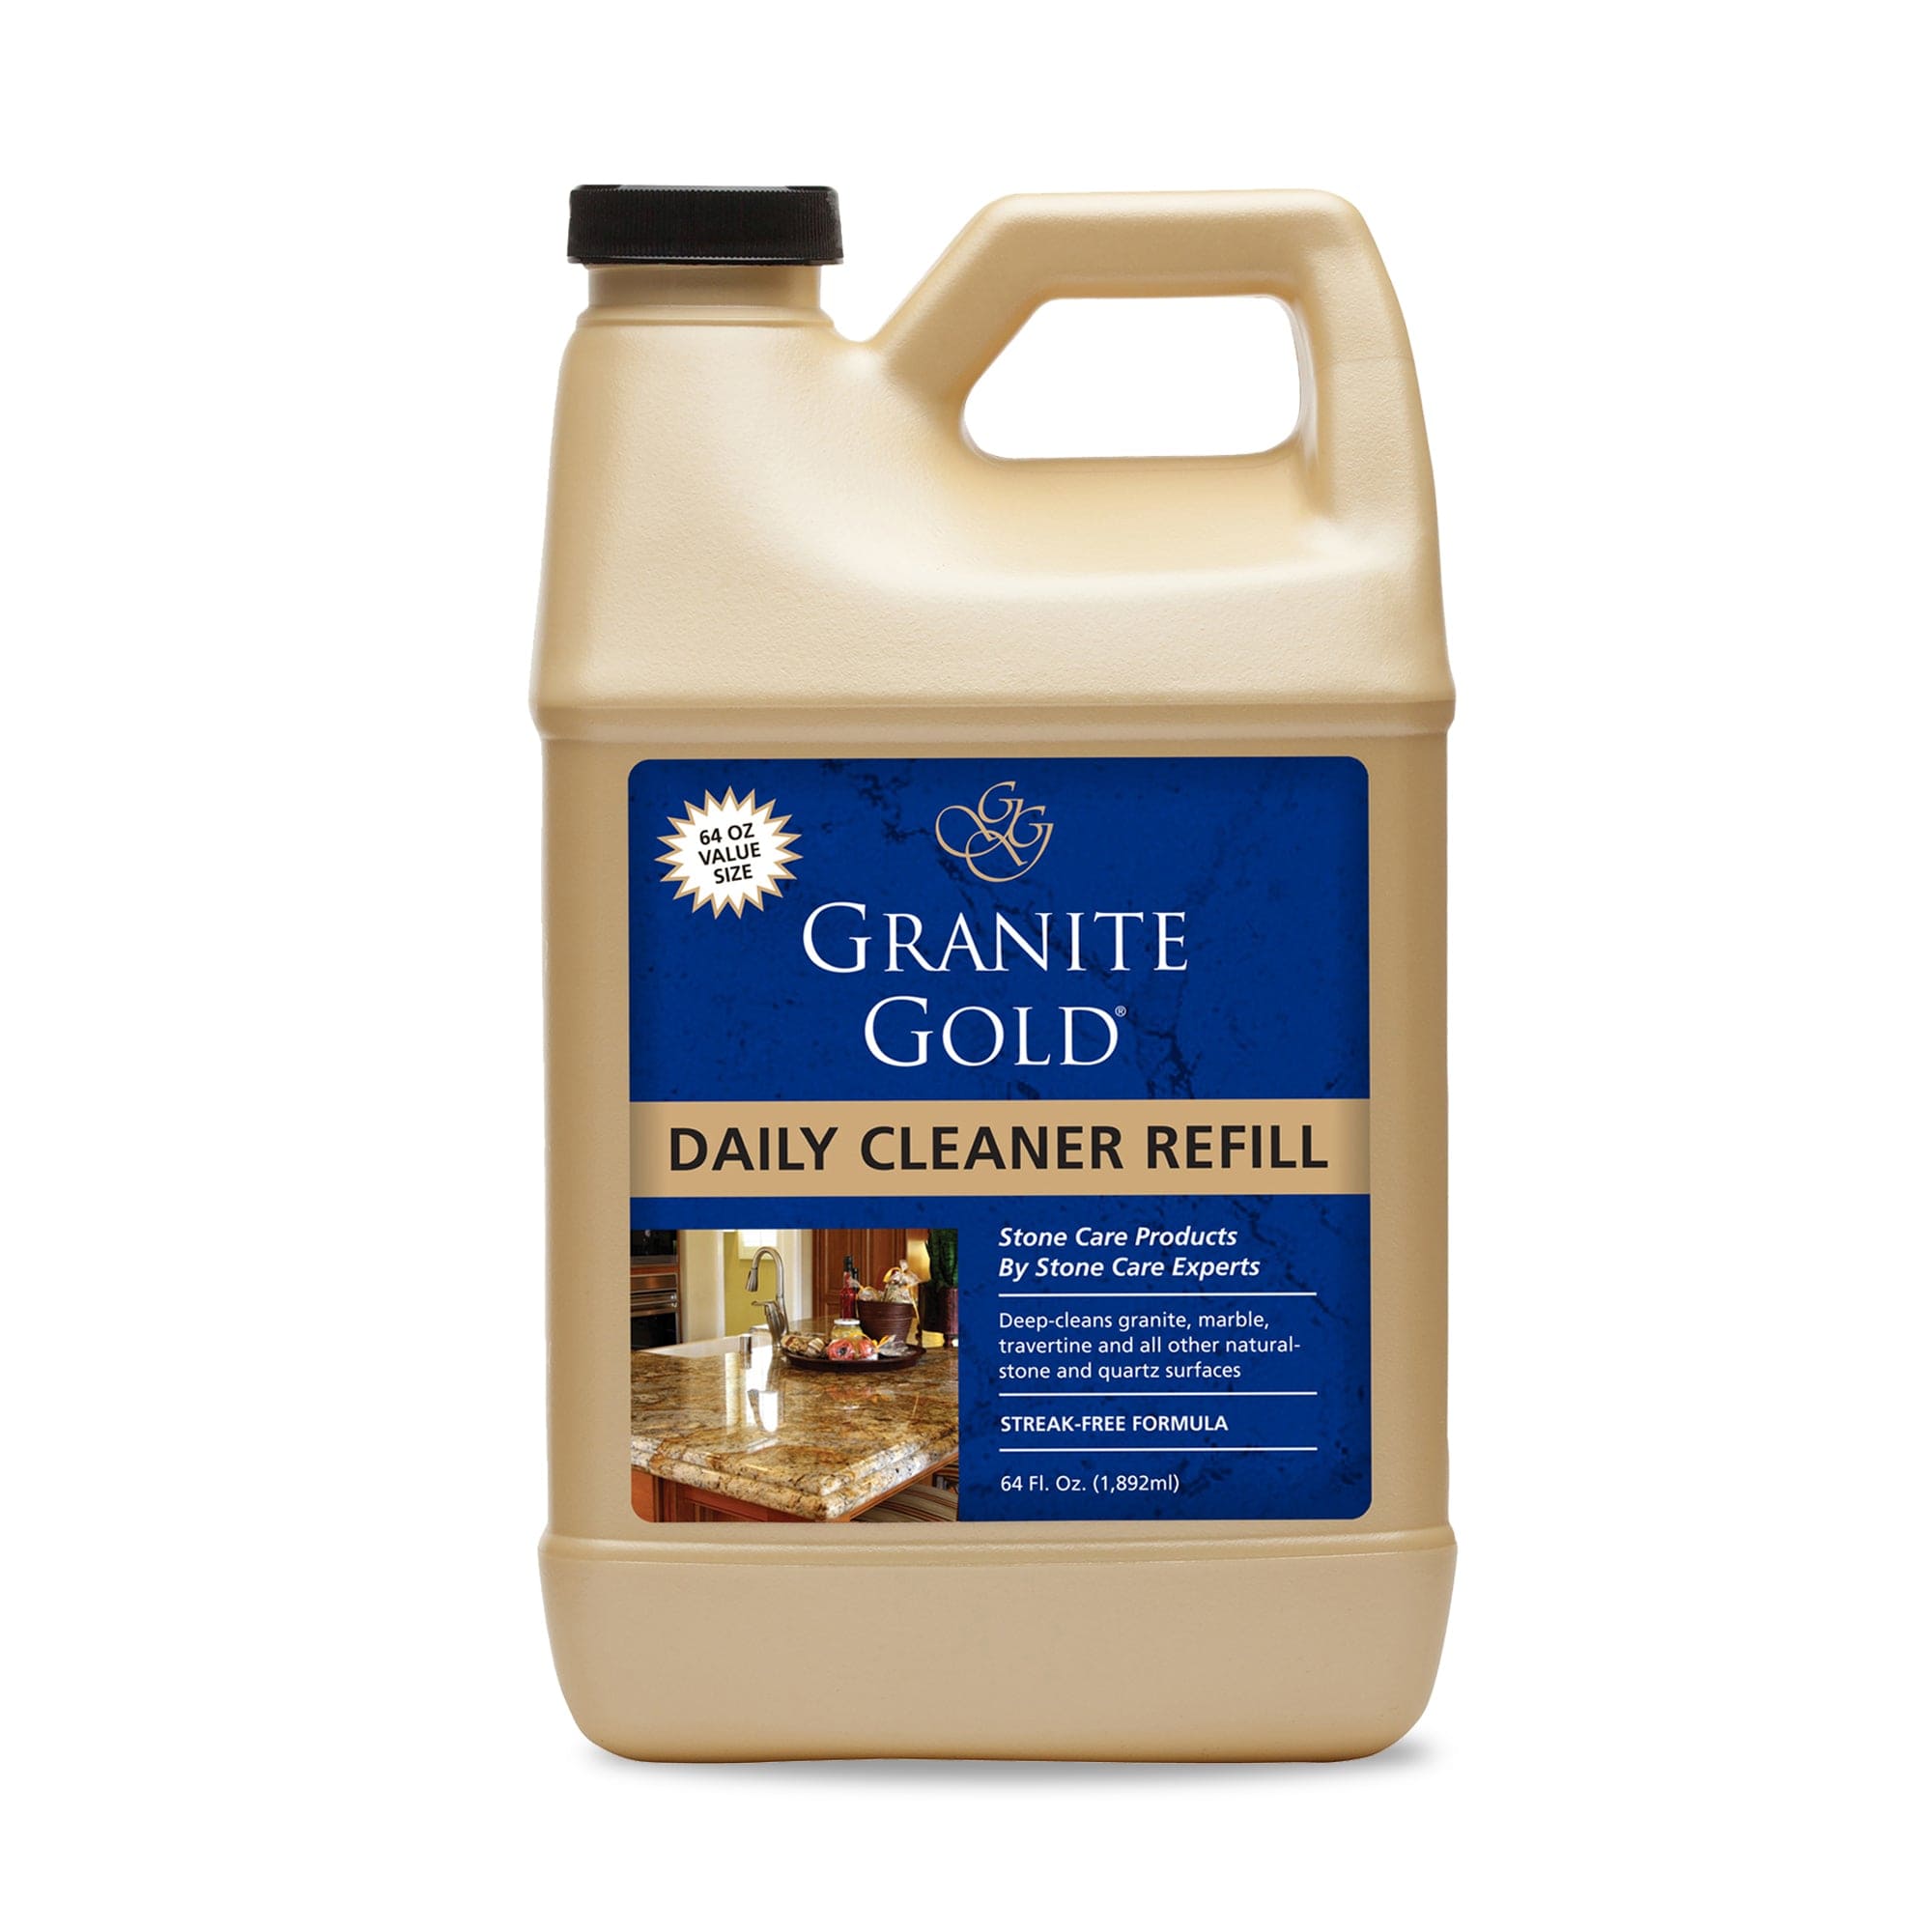 Granite Gold Daily Cleaner Refill - 64 fl oz jug